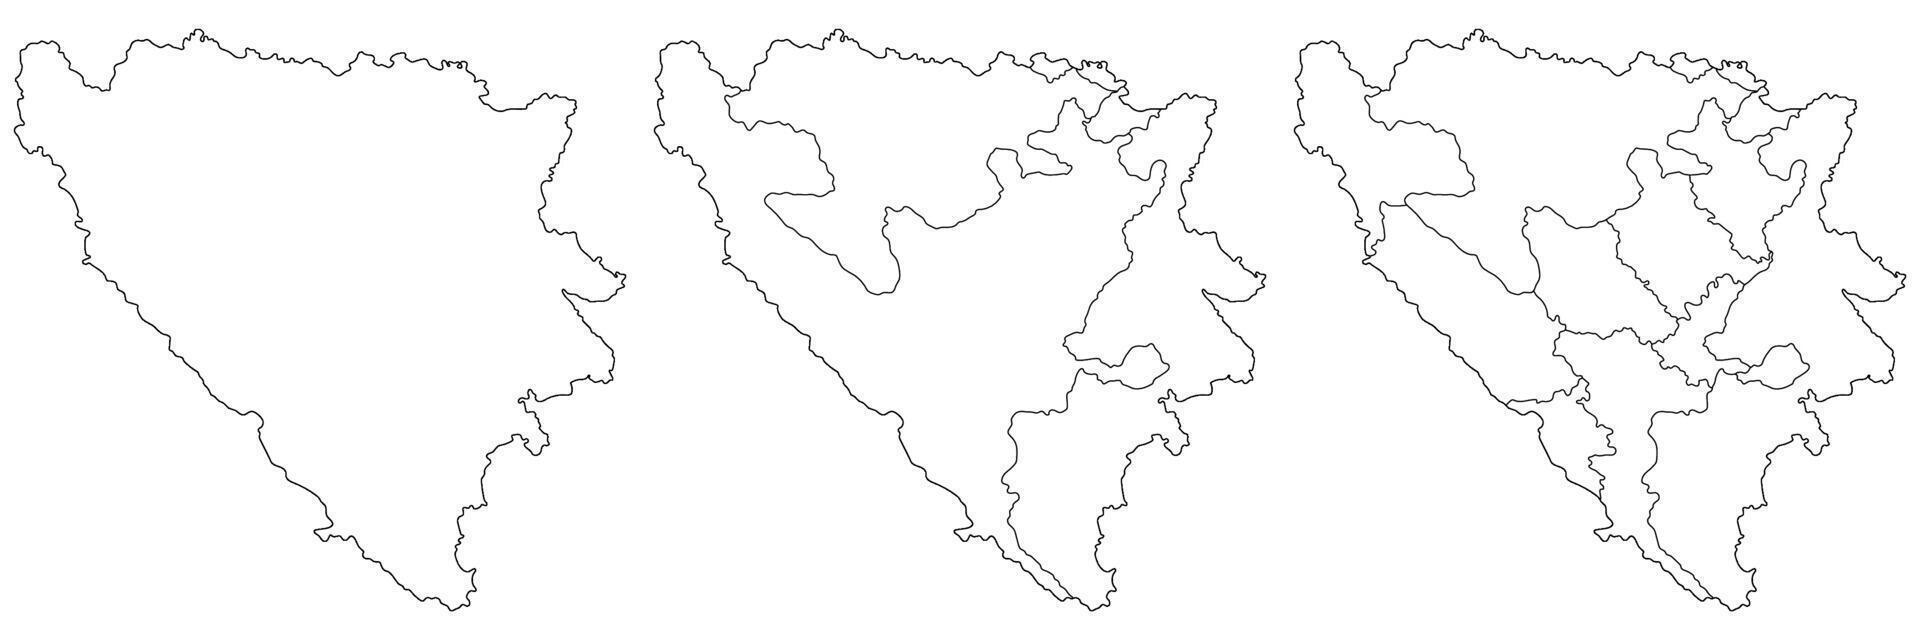 bosnia y herzegovina mapa. mapa de bosnia y herzegovina vector